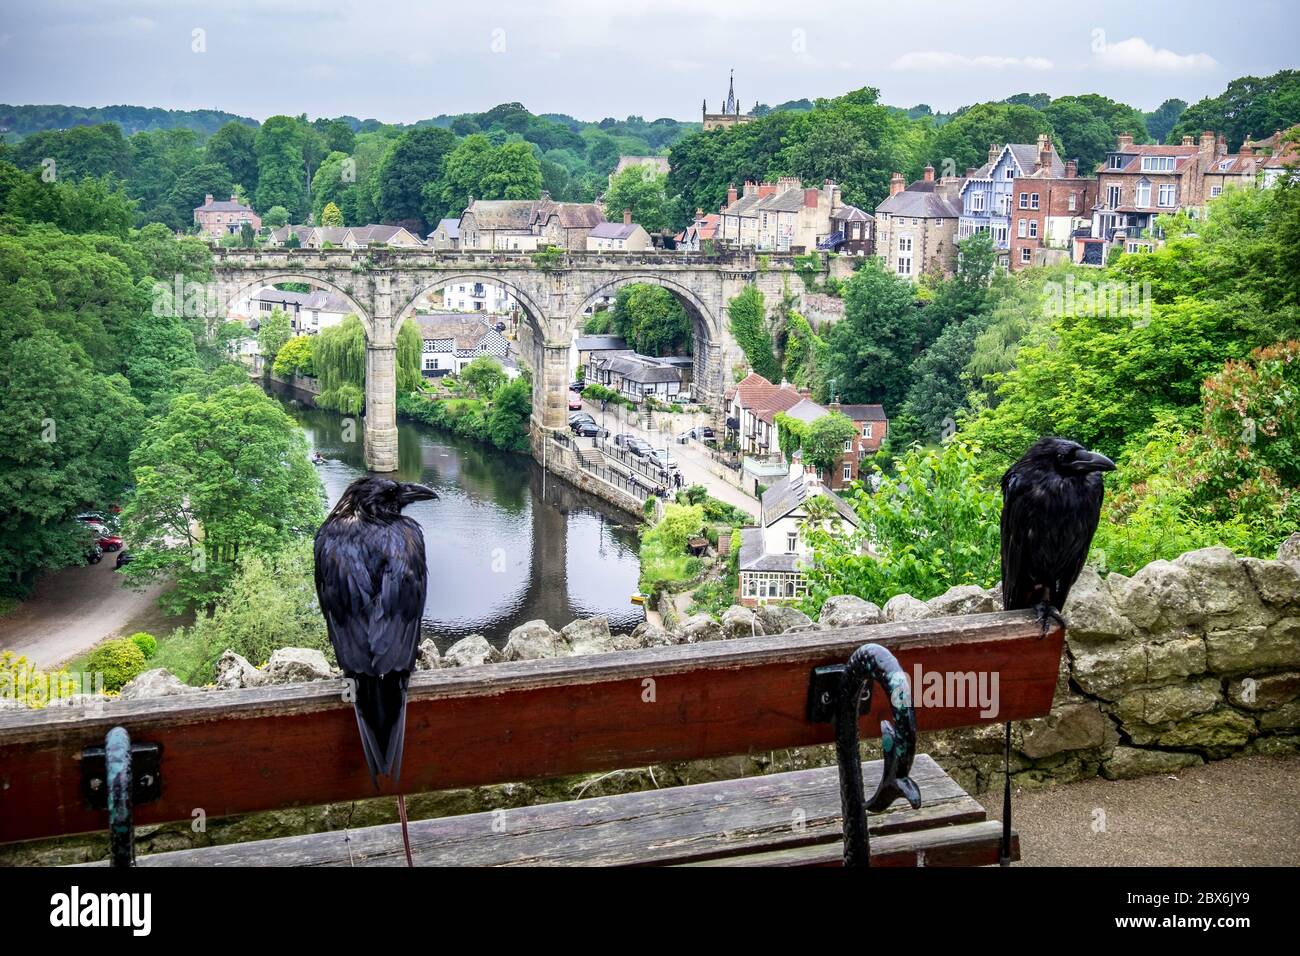 Ravens viewpoint, Knaresbrough, Yorkshire Stock Photo